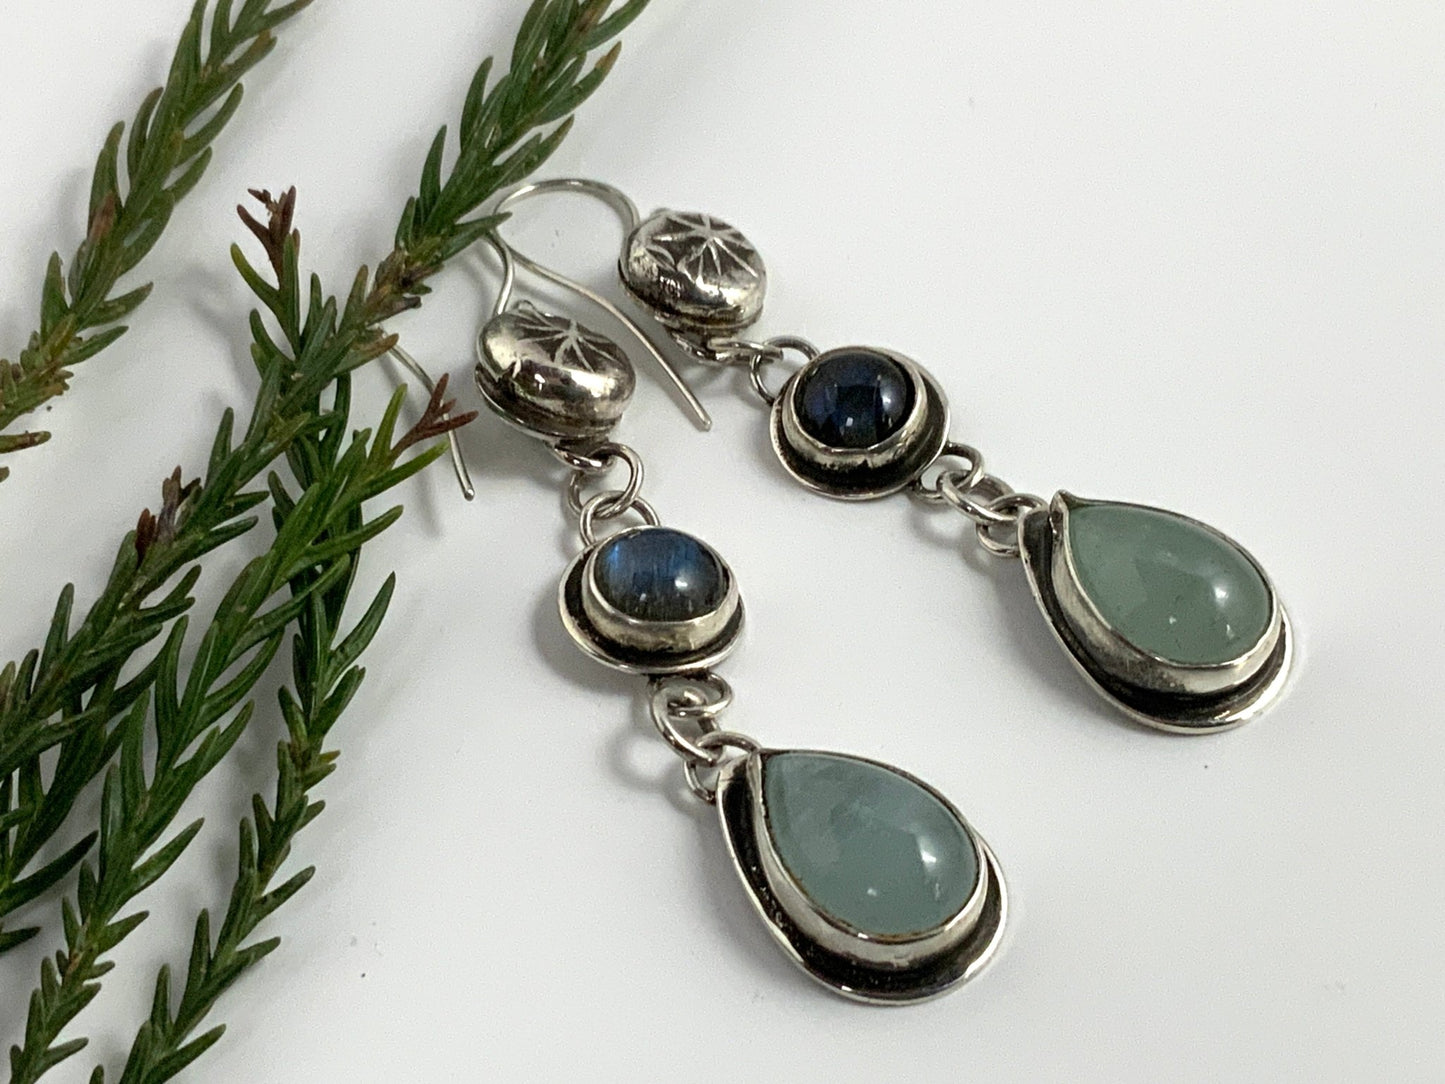 Aquamarine and Labradorite Secret Garden Earrings - Evitts Creek Arts